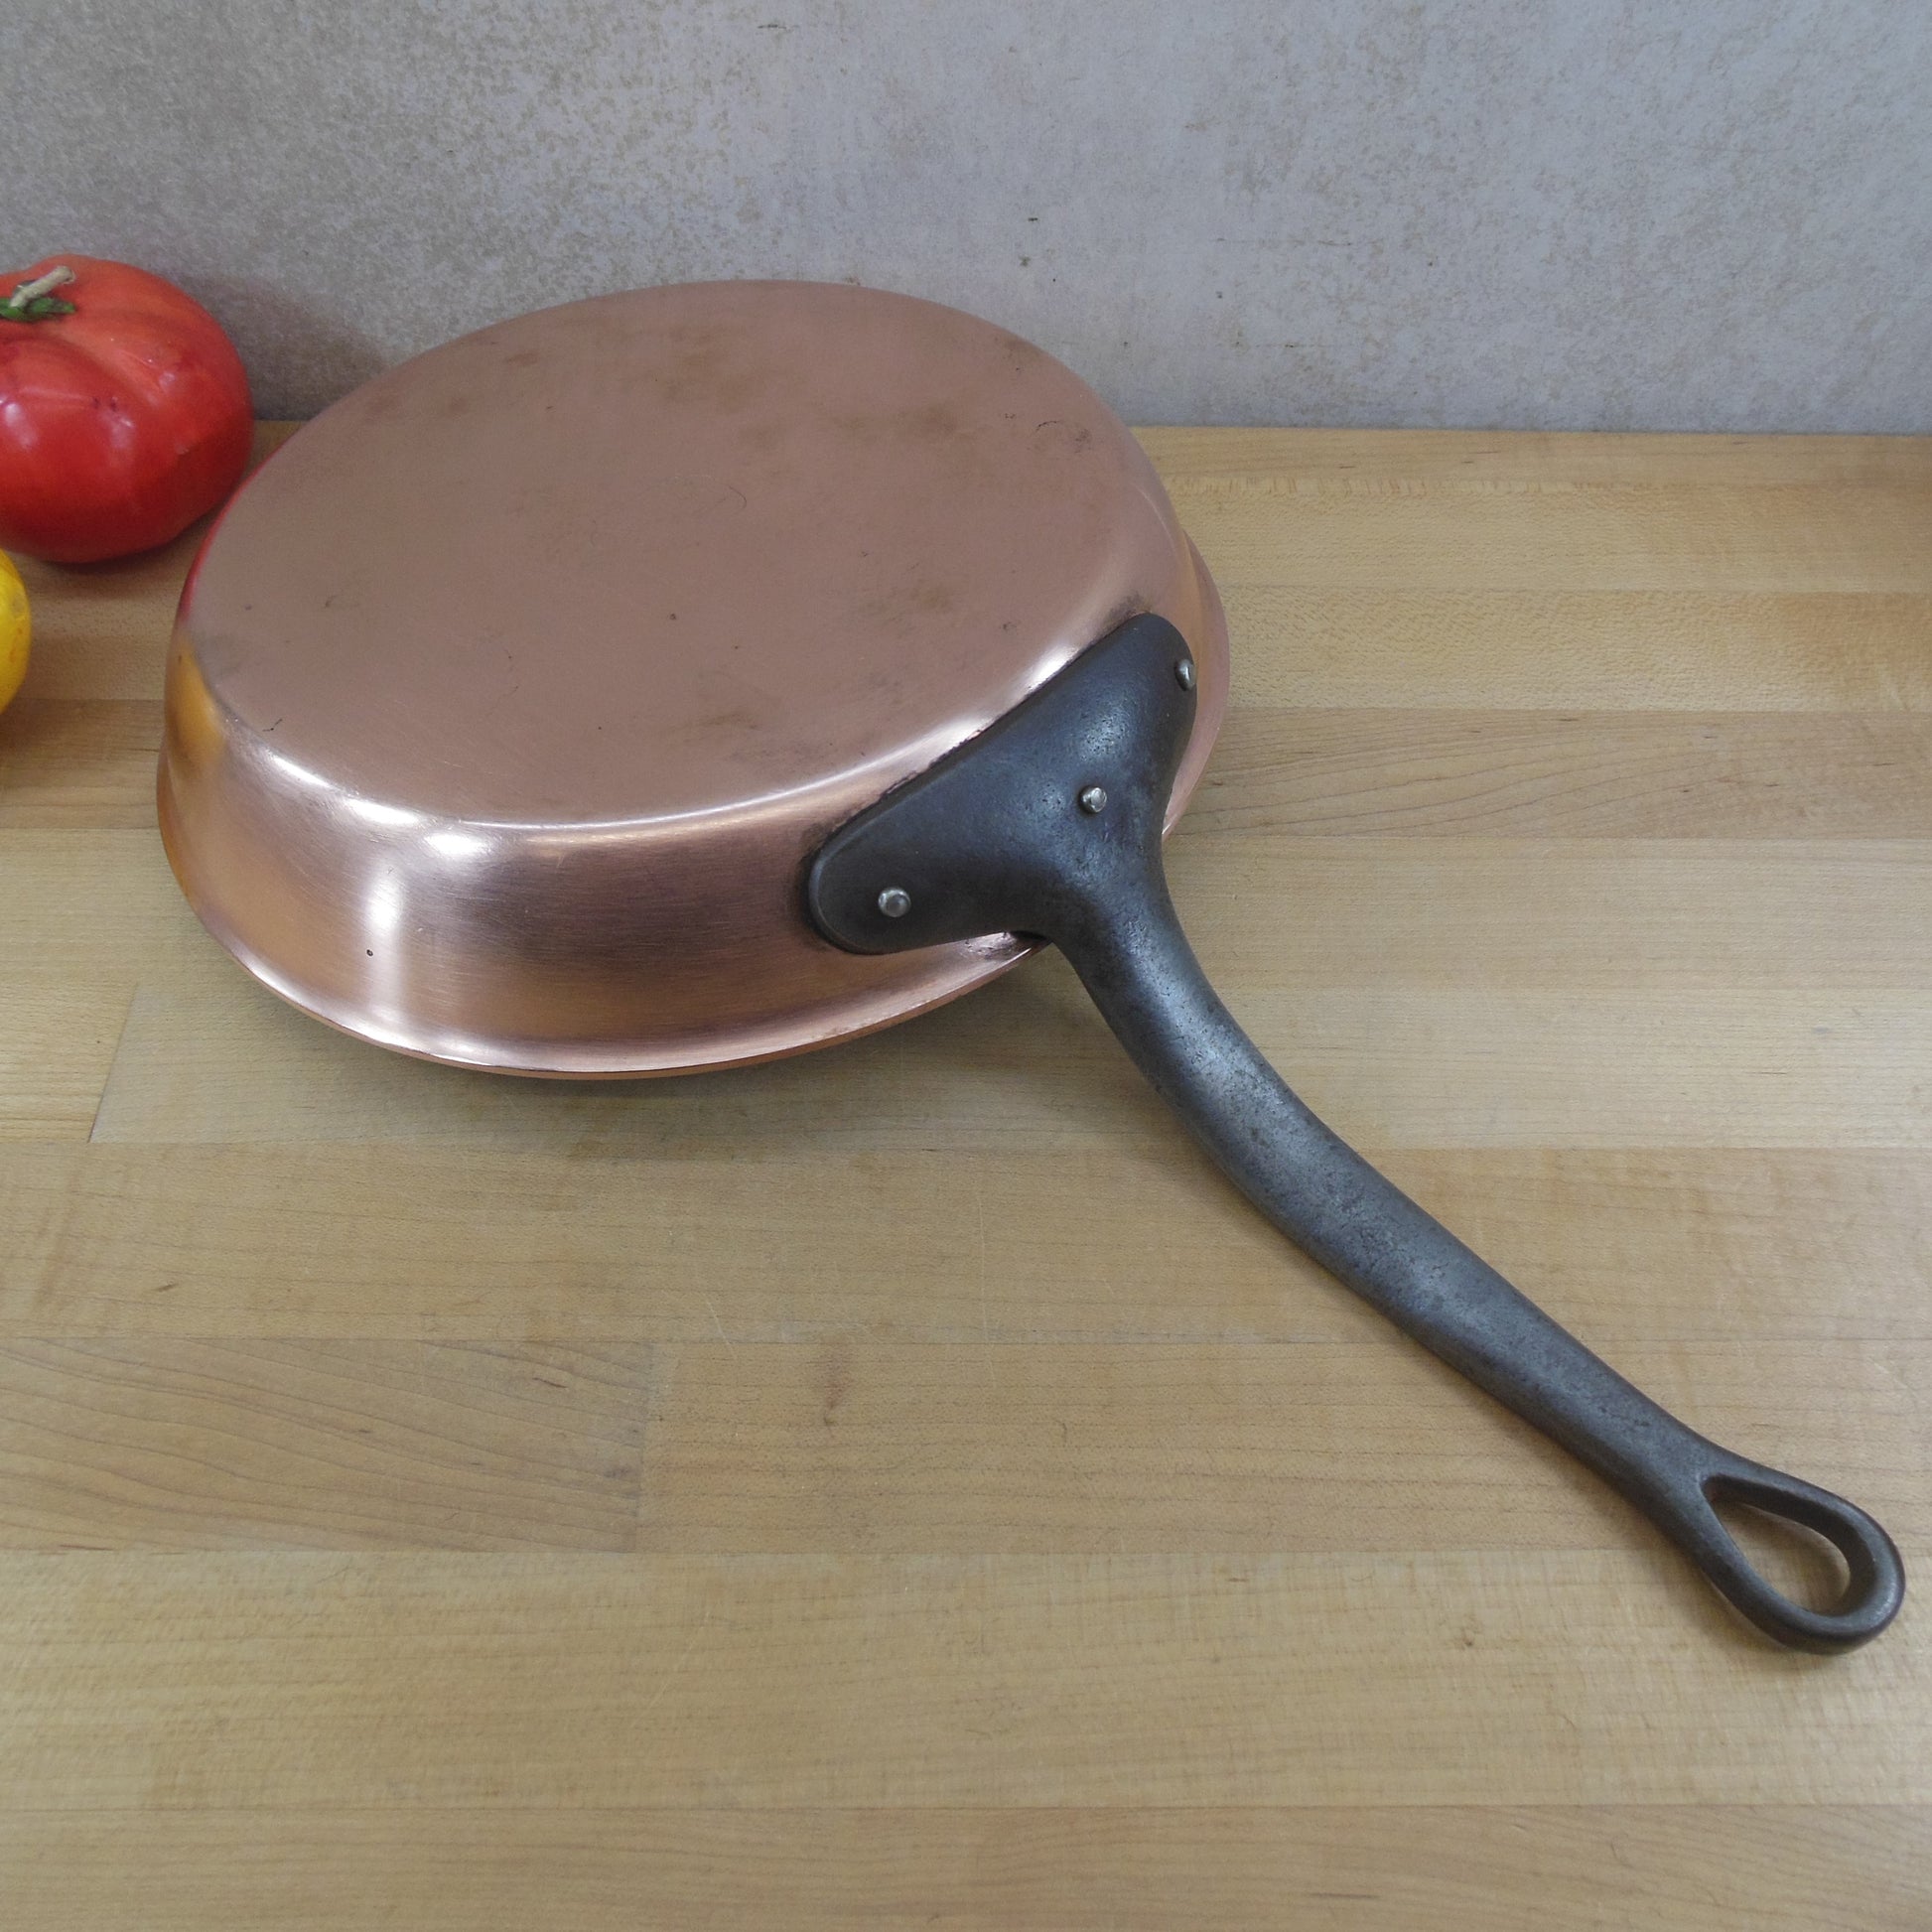 Falk Culinair Belgium 24cm Classic Copper Stainless Fry Pan 9-1/4" skillet